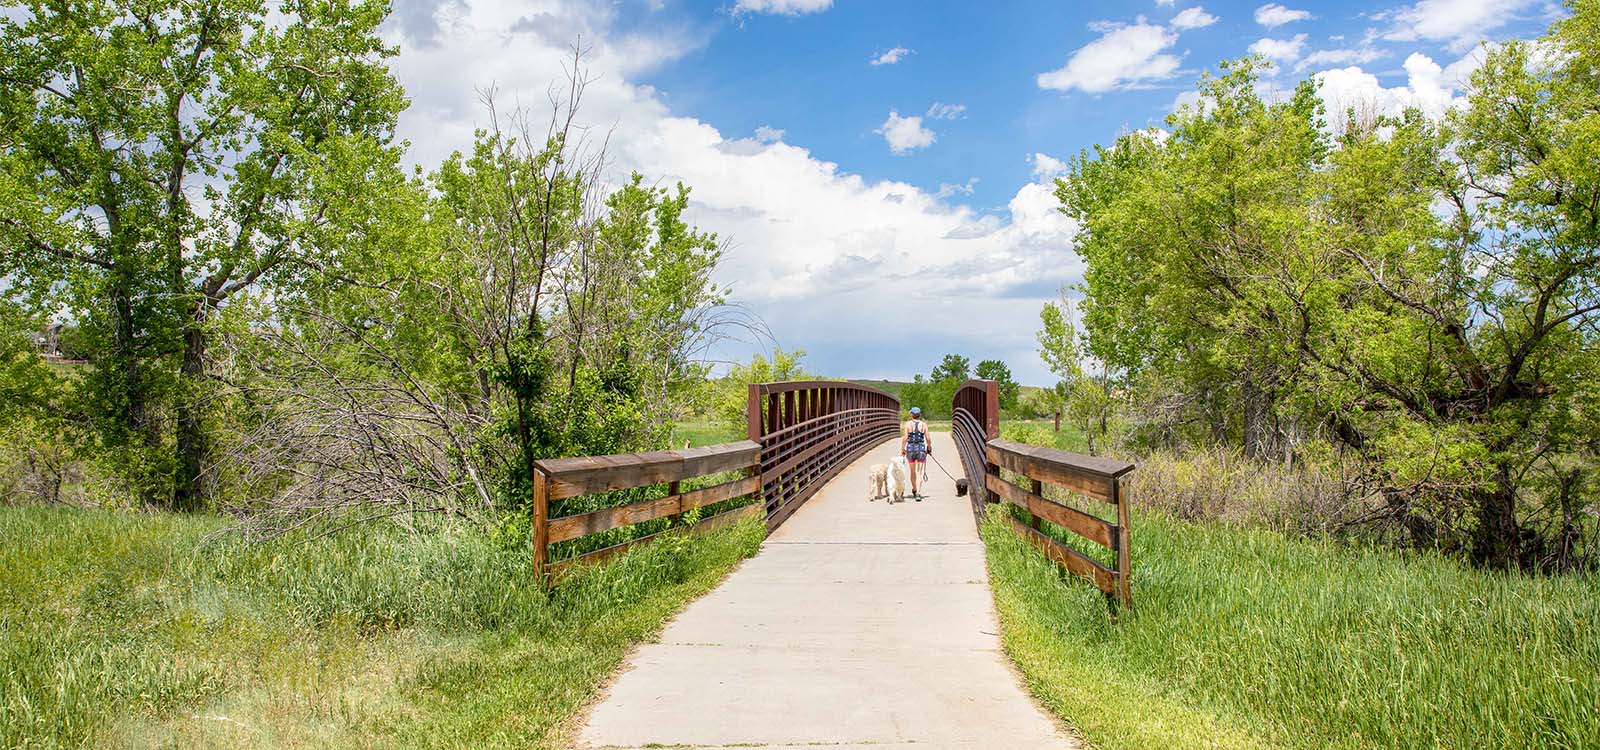 Take A Hike Final Leg Of Cherry Creek Regional Trail Takes Shape This